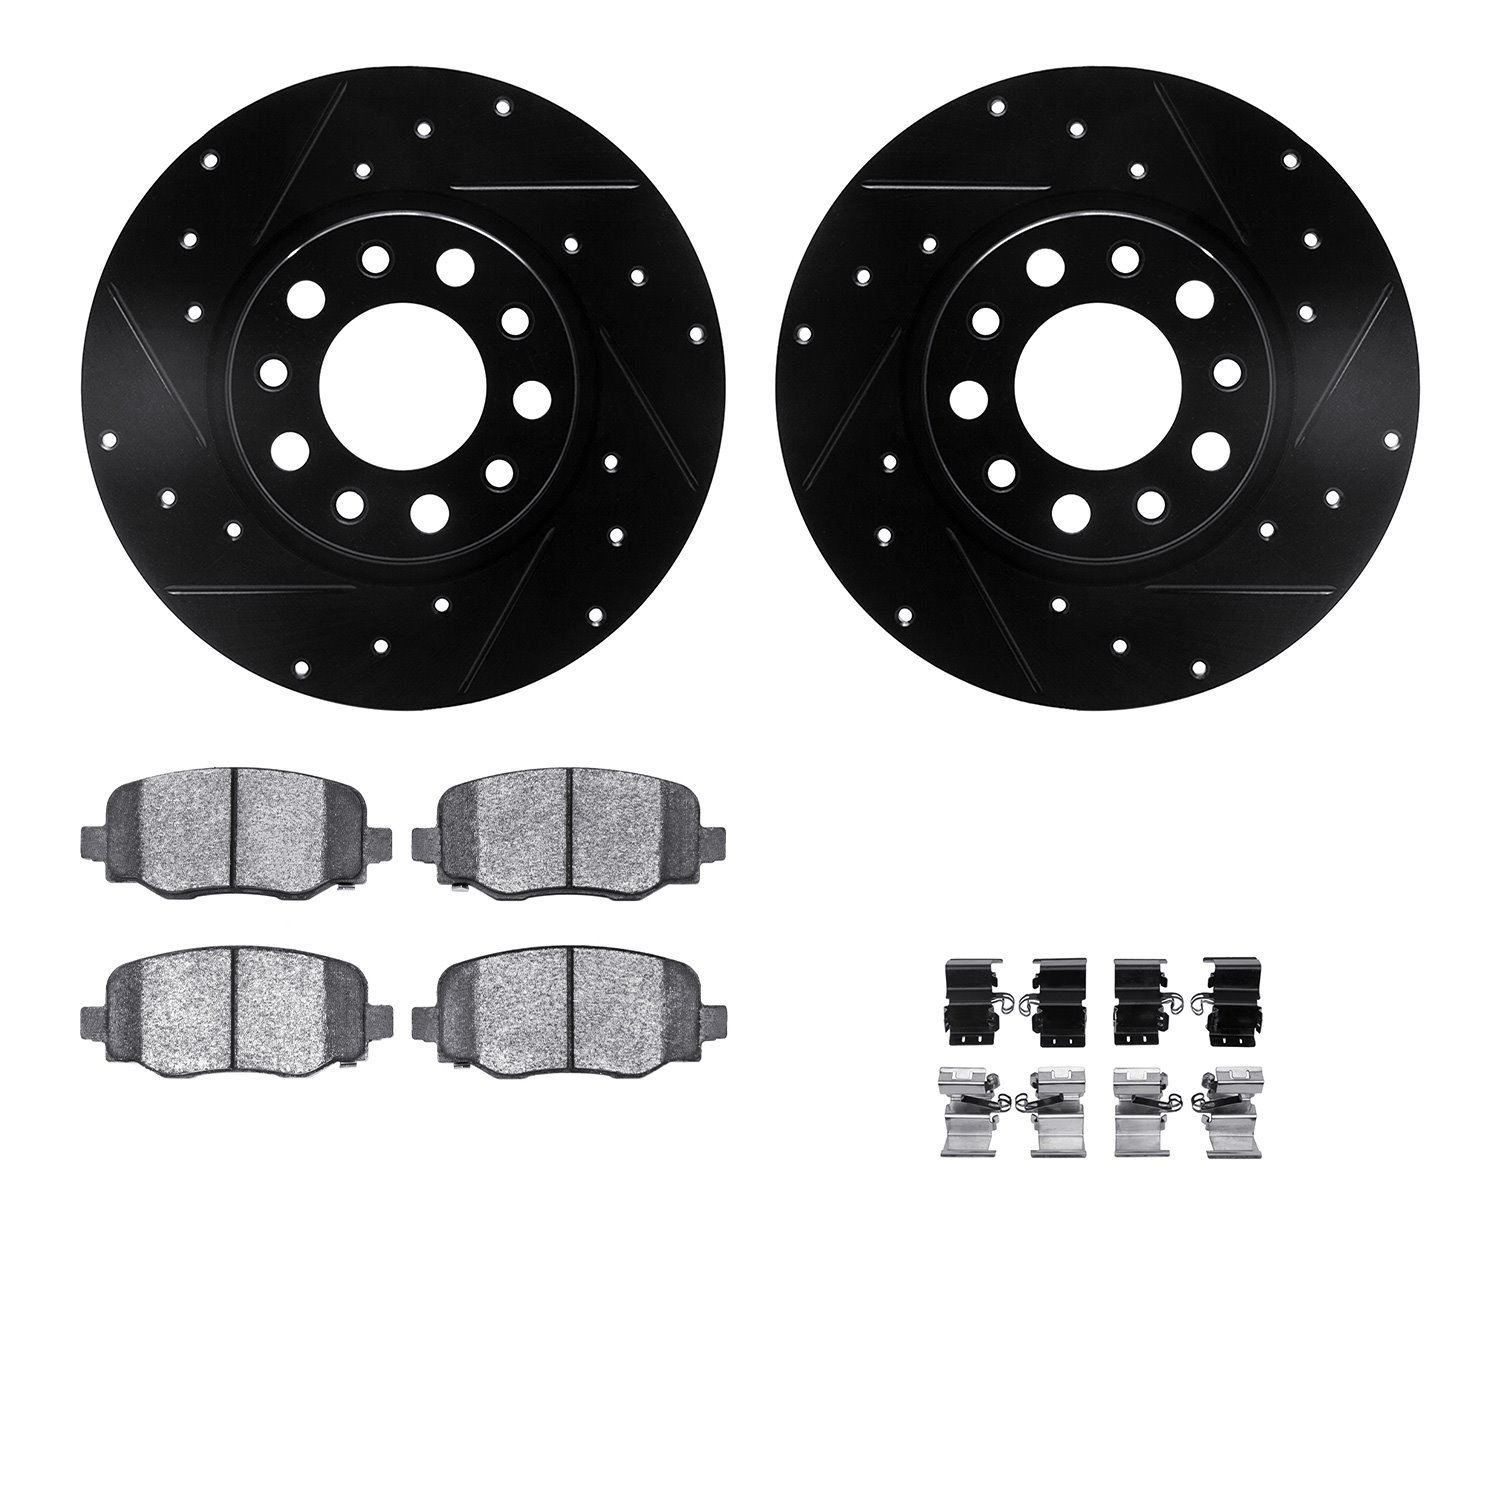 8312-42045 Drilled/Slotted Brake Rotors with 3000-Series Ceramic Brake Pads Kit & Hardware [Black], Fits Select Mopar, Position: